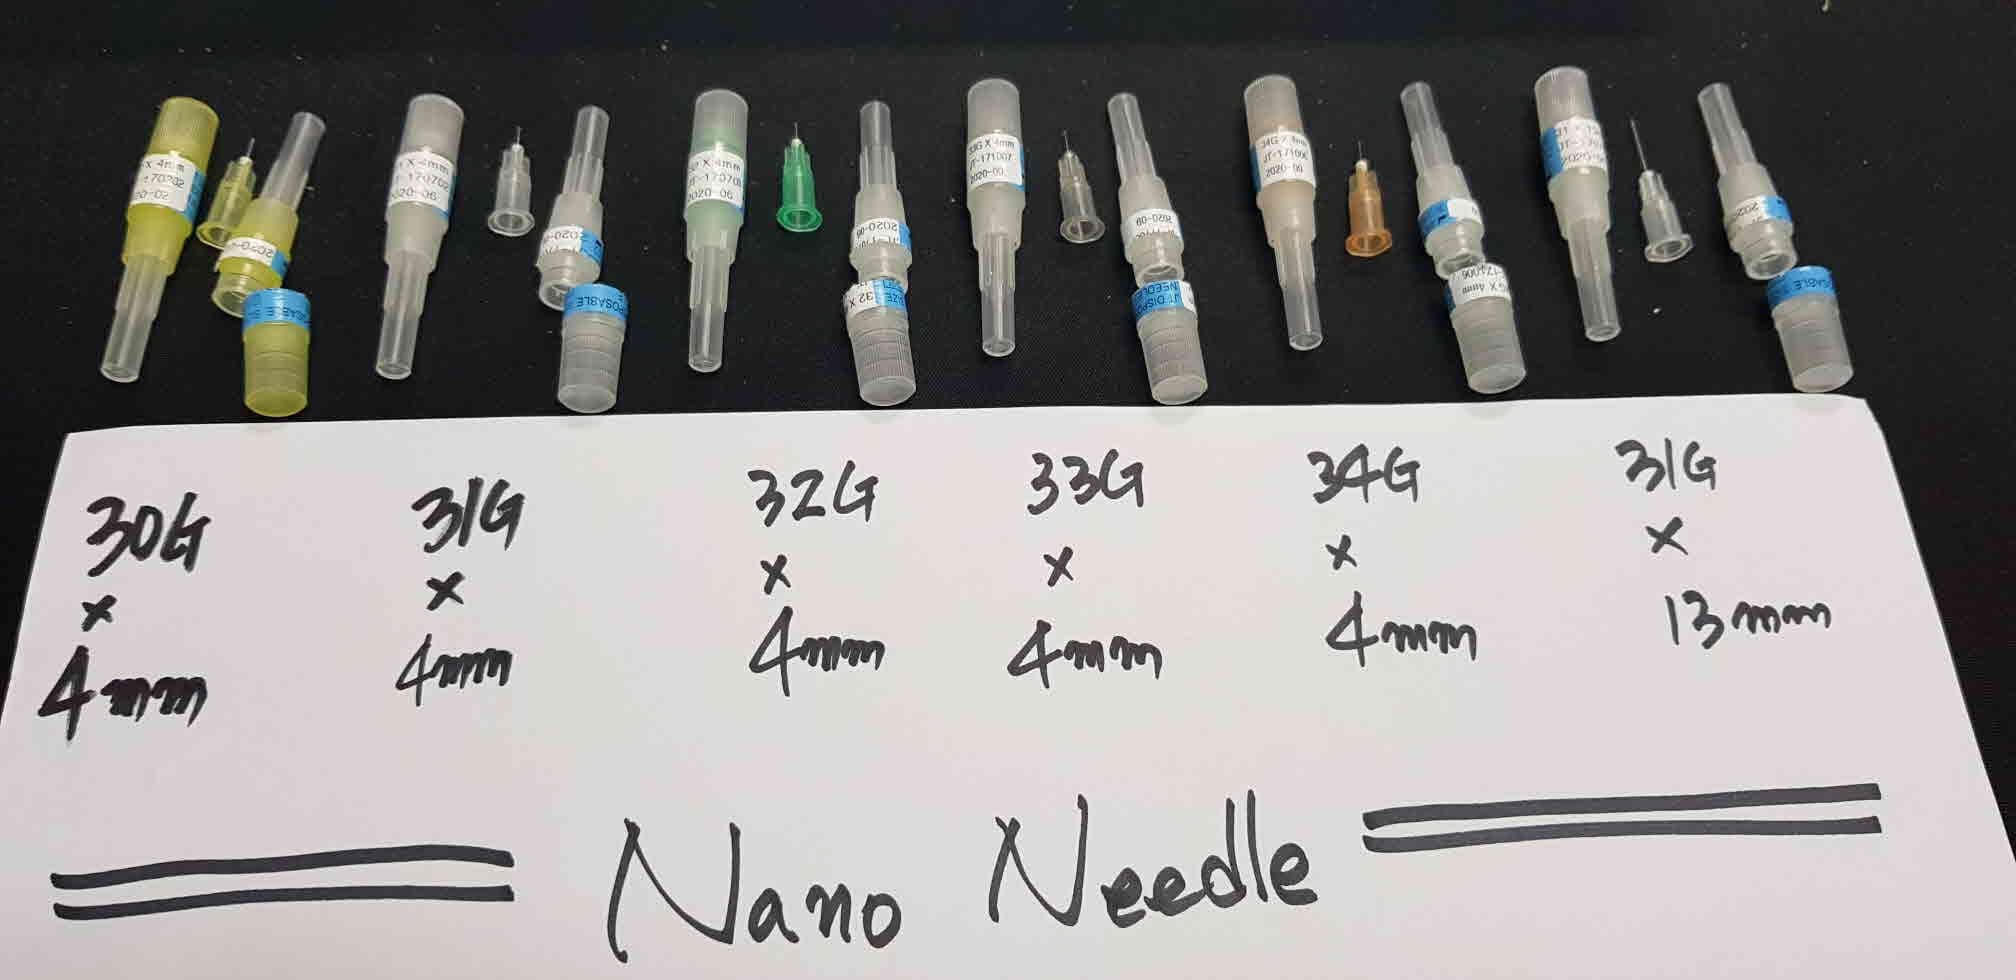 Nano Needle for mesotherapy purposes